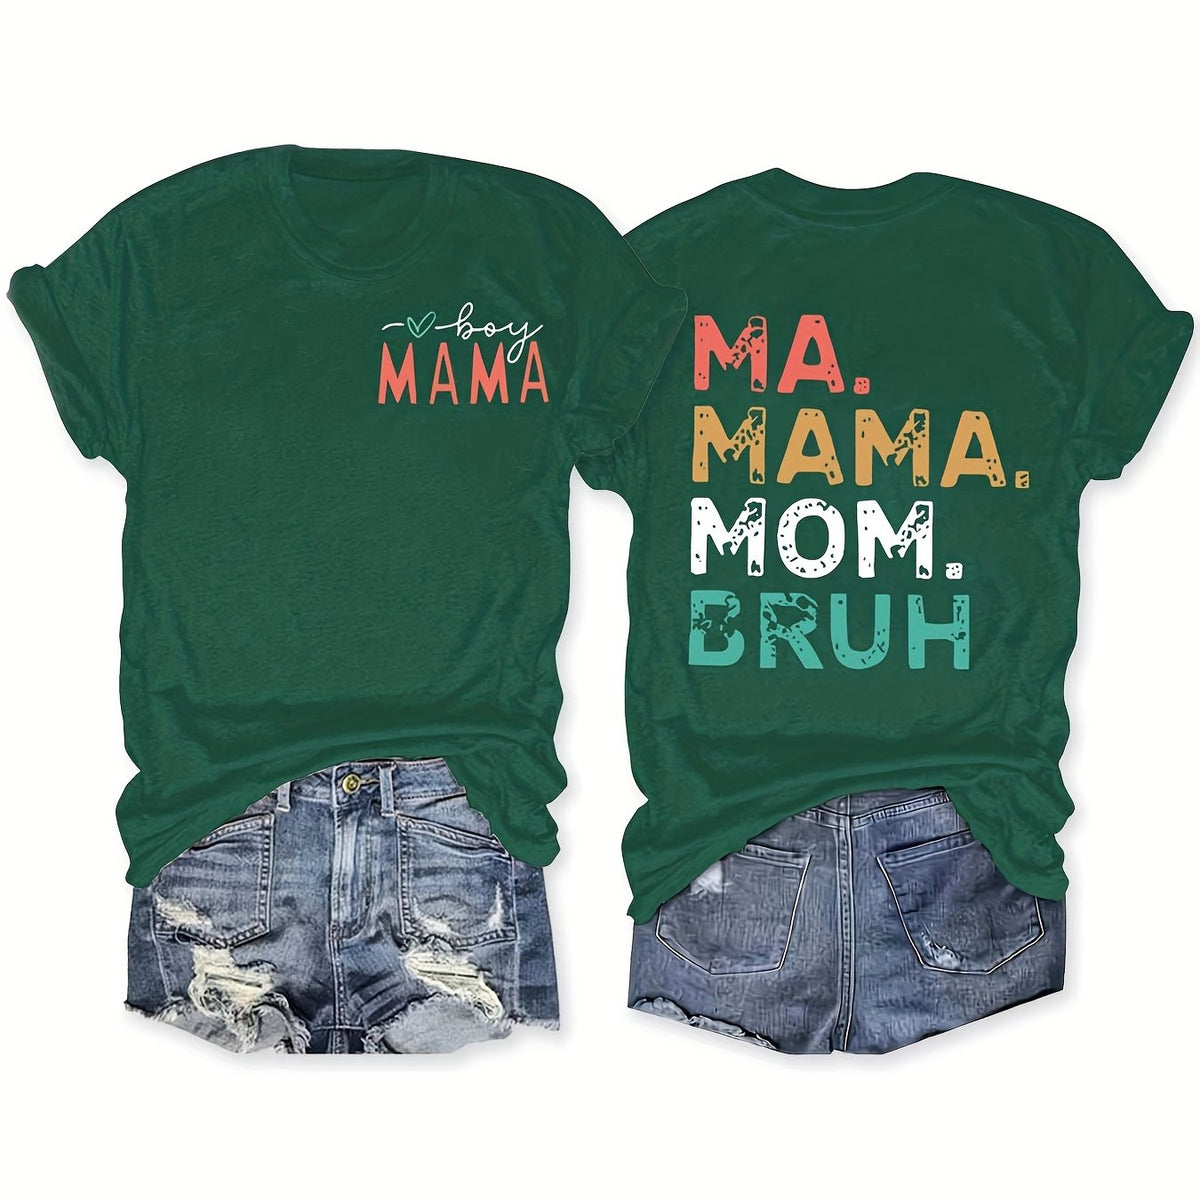 MA.MAMA.MOM.BRUH T-Shirt